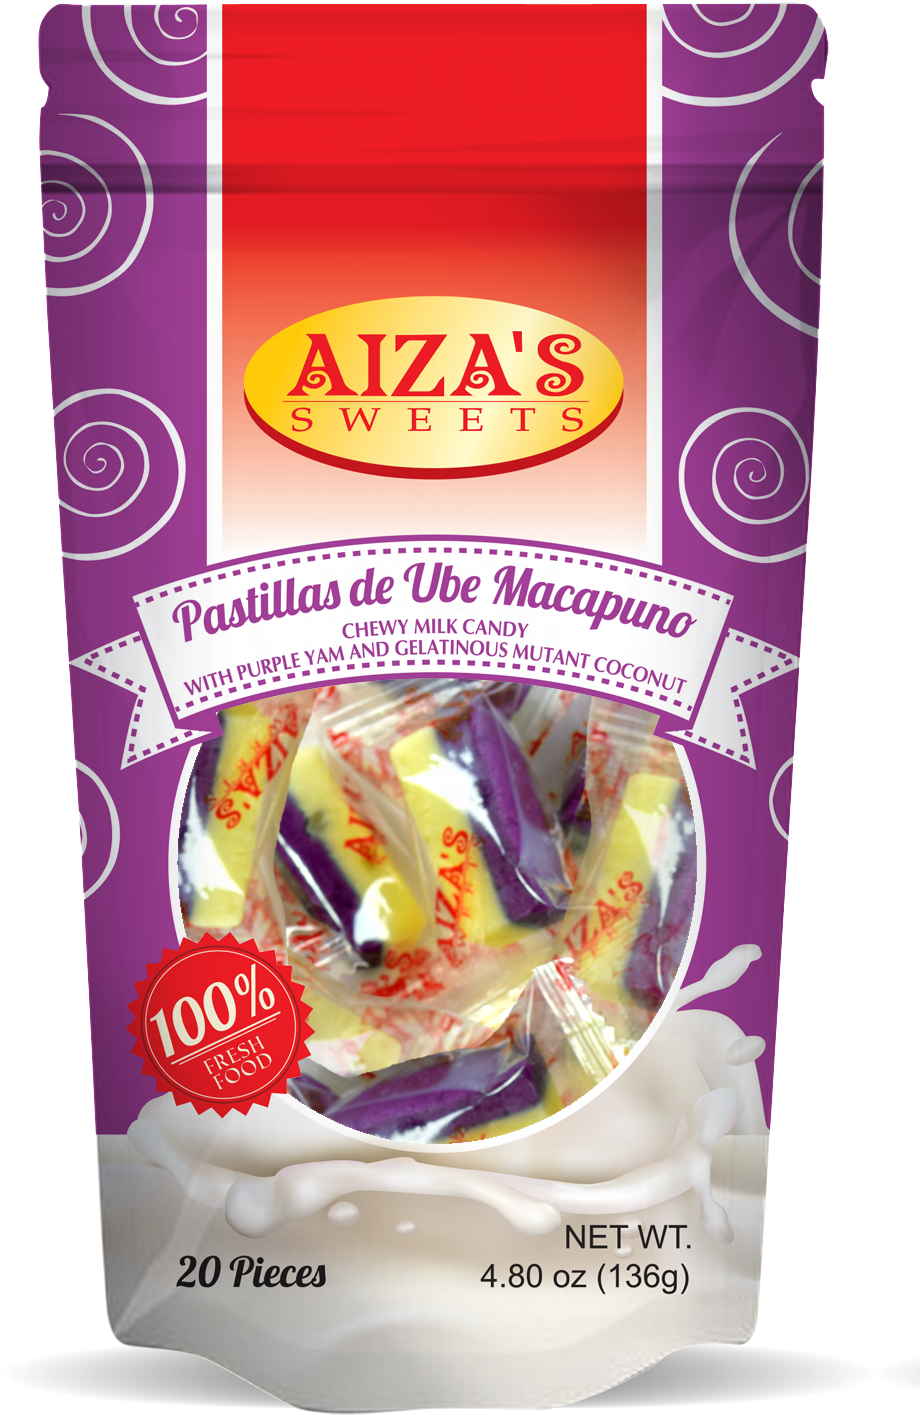 Aiza's Sweets Pastillas de Ube Macapuno